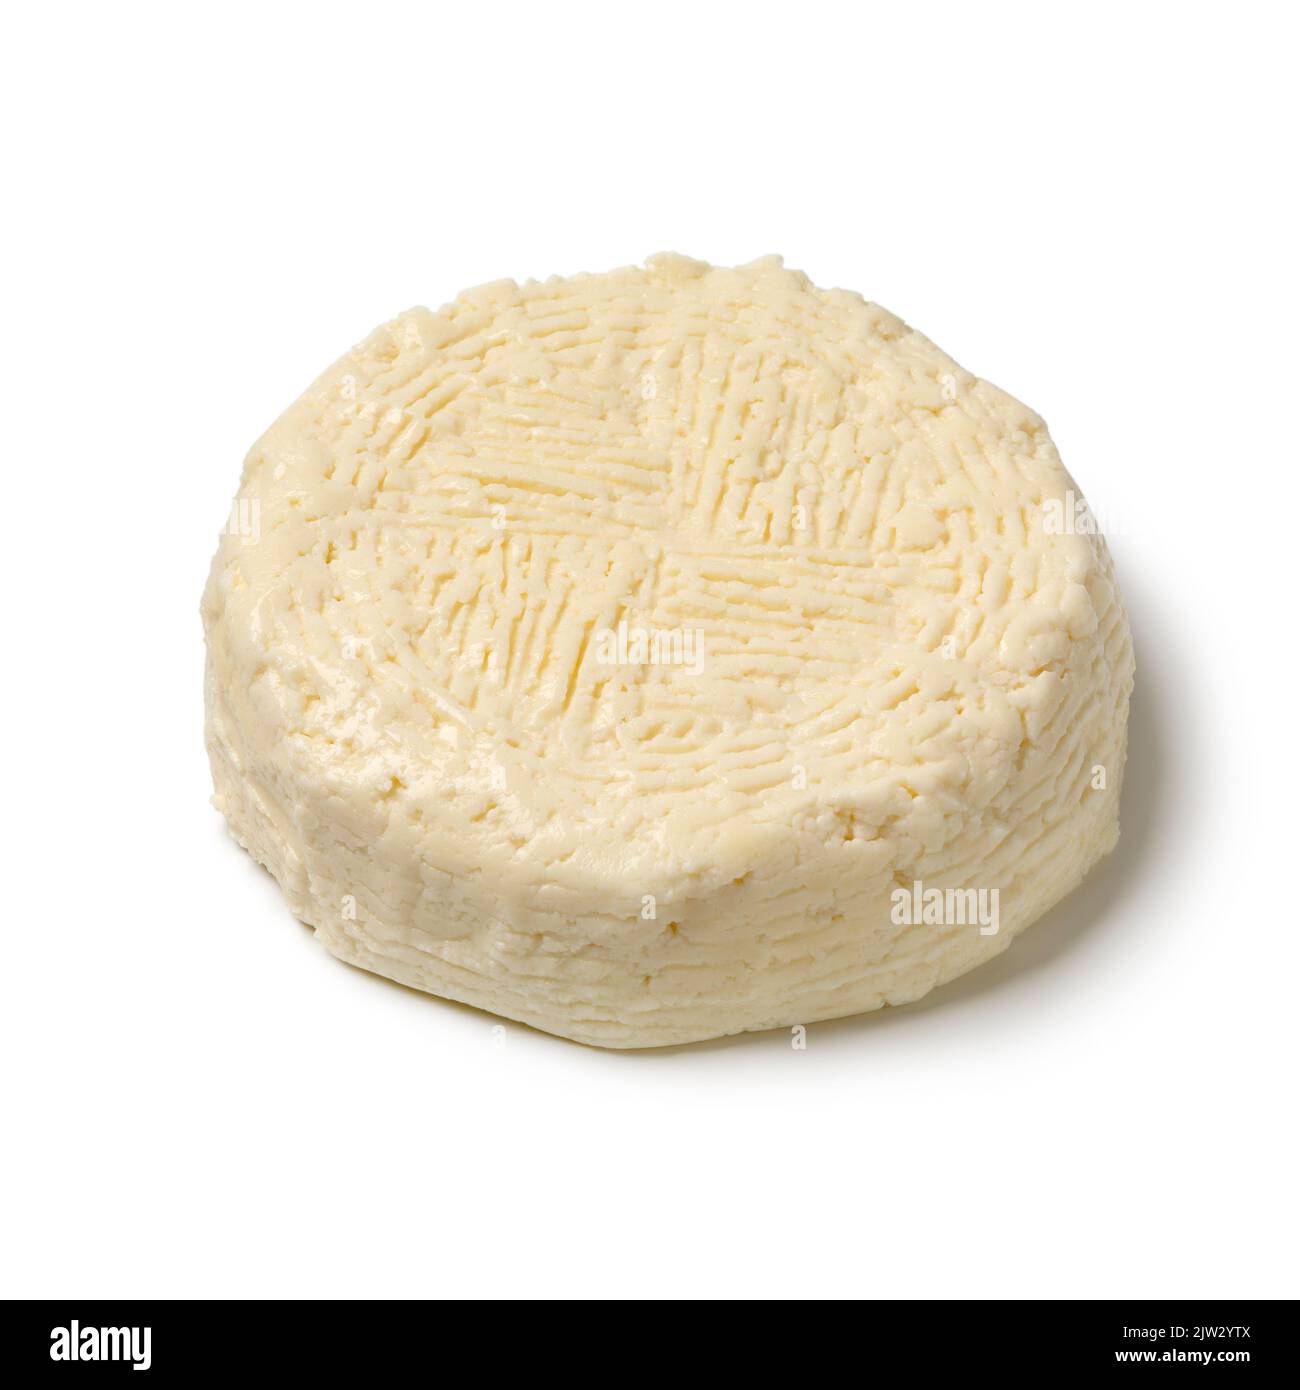 Una pieza de queso blanco casero tradicional croata de leche cocida, Kuhani sirevi, cerca aislado sobre fondo blanco Foto de stock